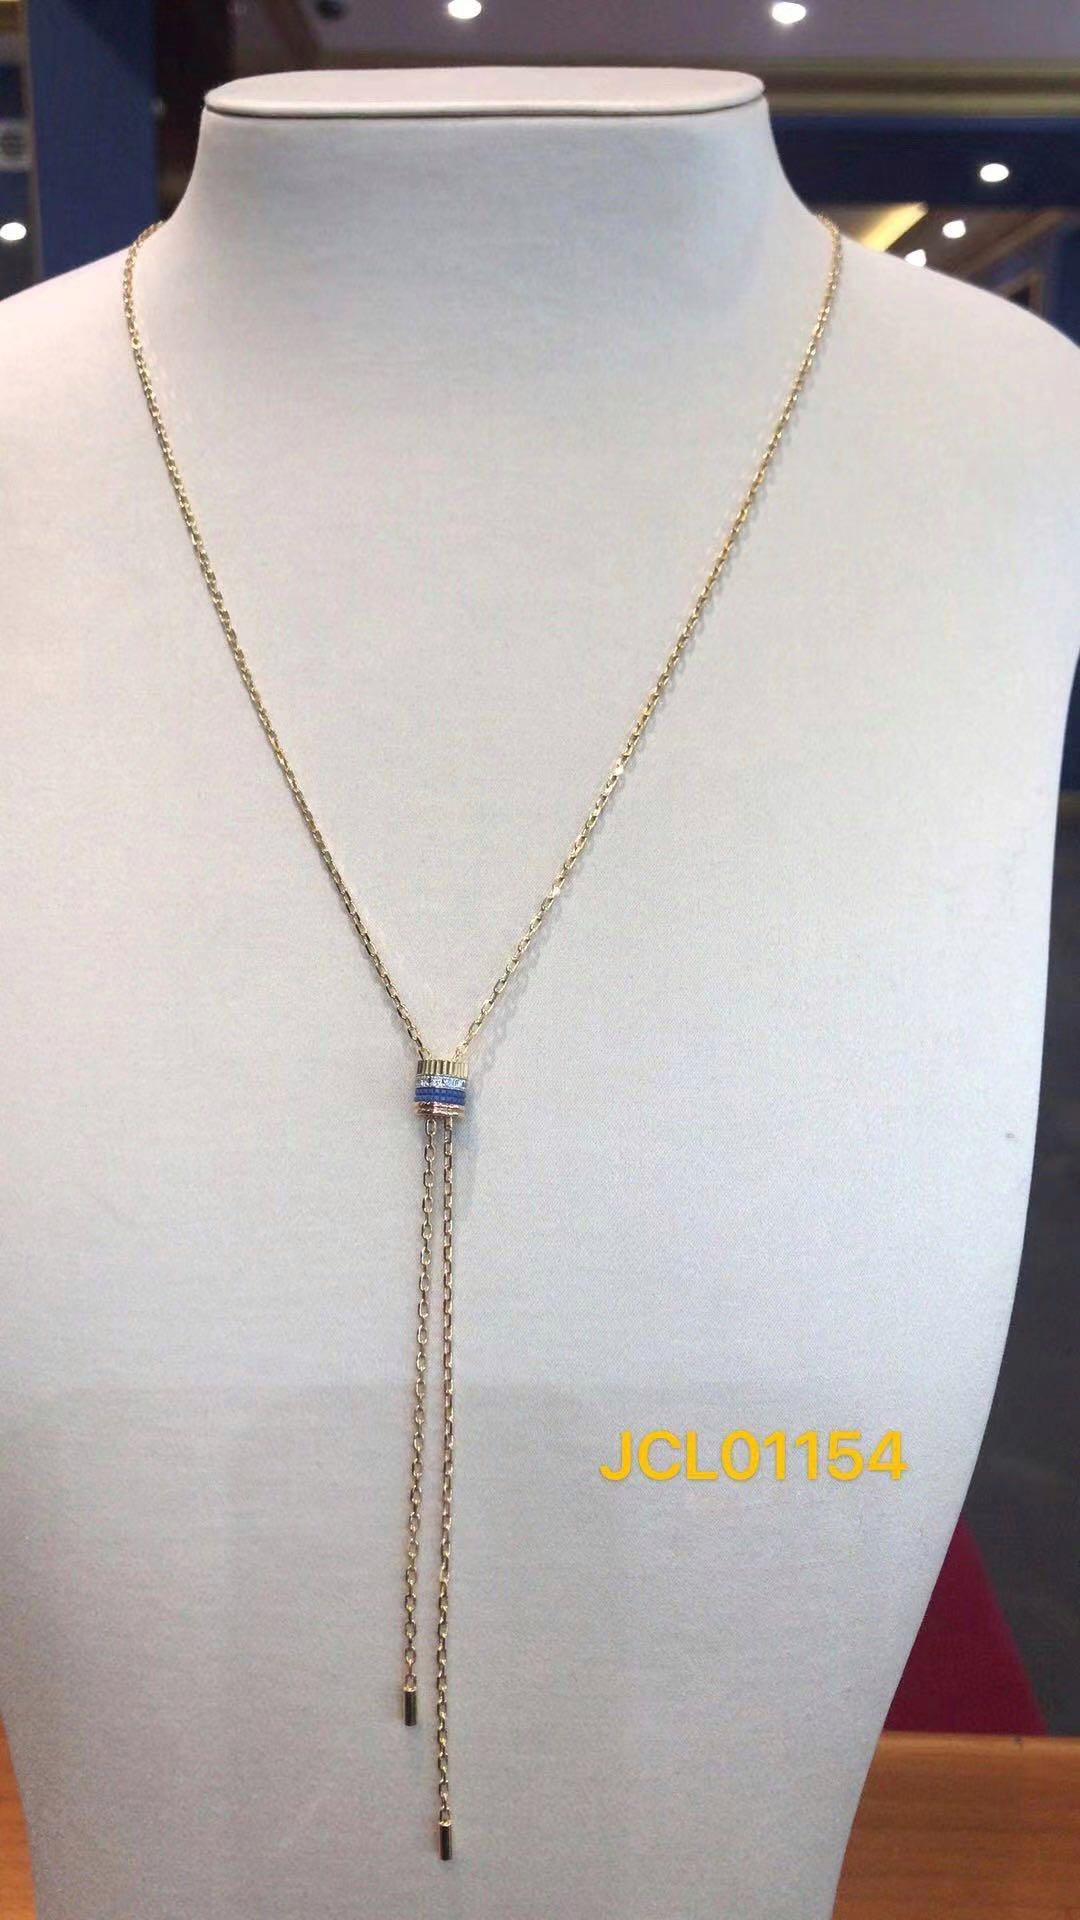 【ELYSEES】BOUCHERON宝诗龙QUATRE蓝陶瓷钻石75cm长项链JCL01154